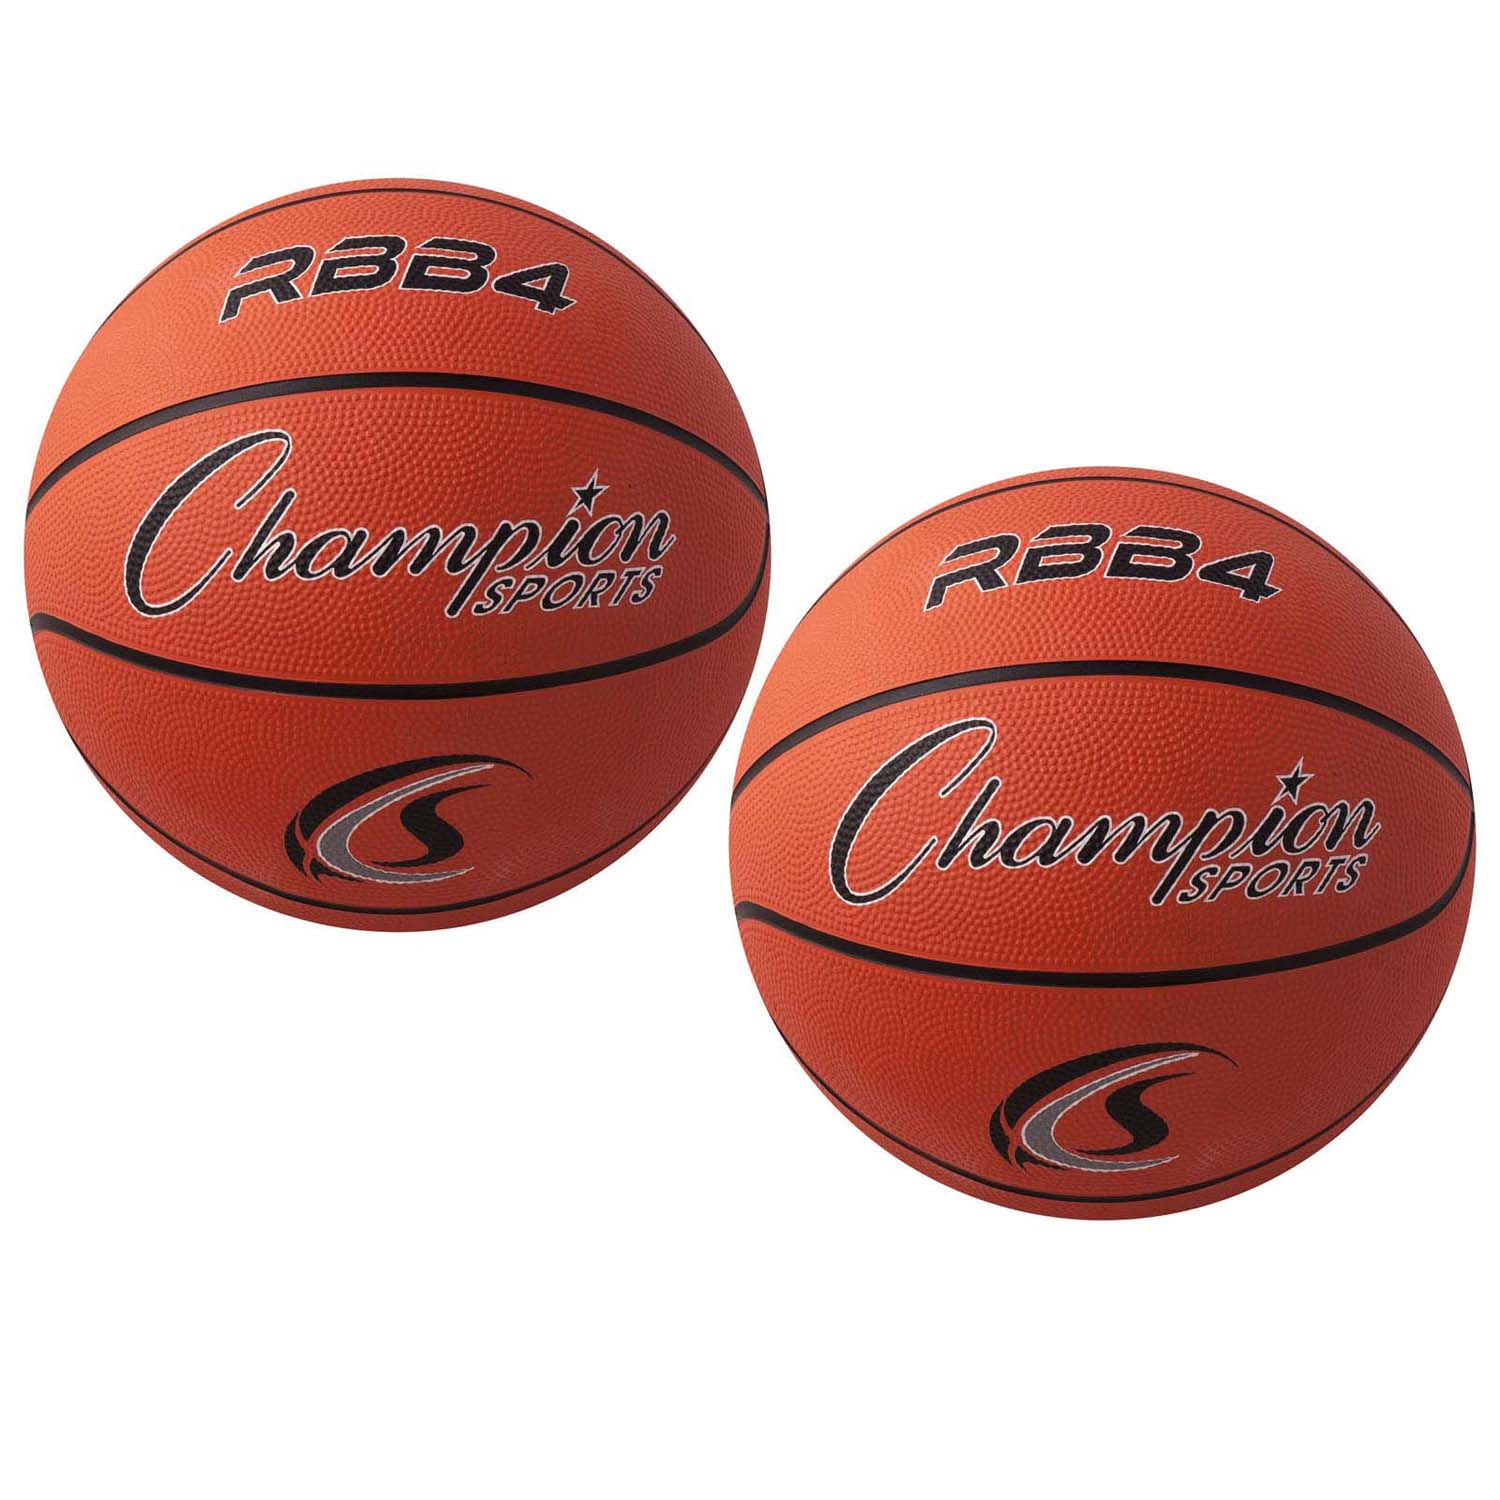 Intermediate Rubber Basketball, Size 6, Orange, Pack of 2